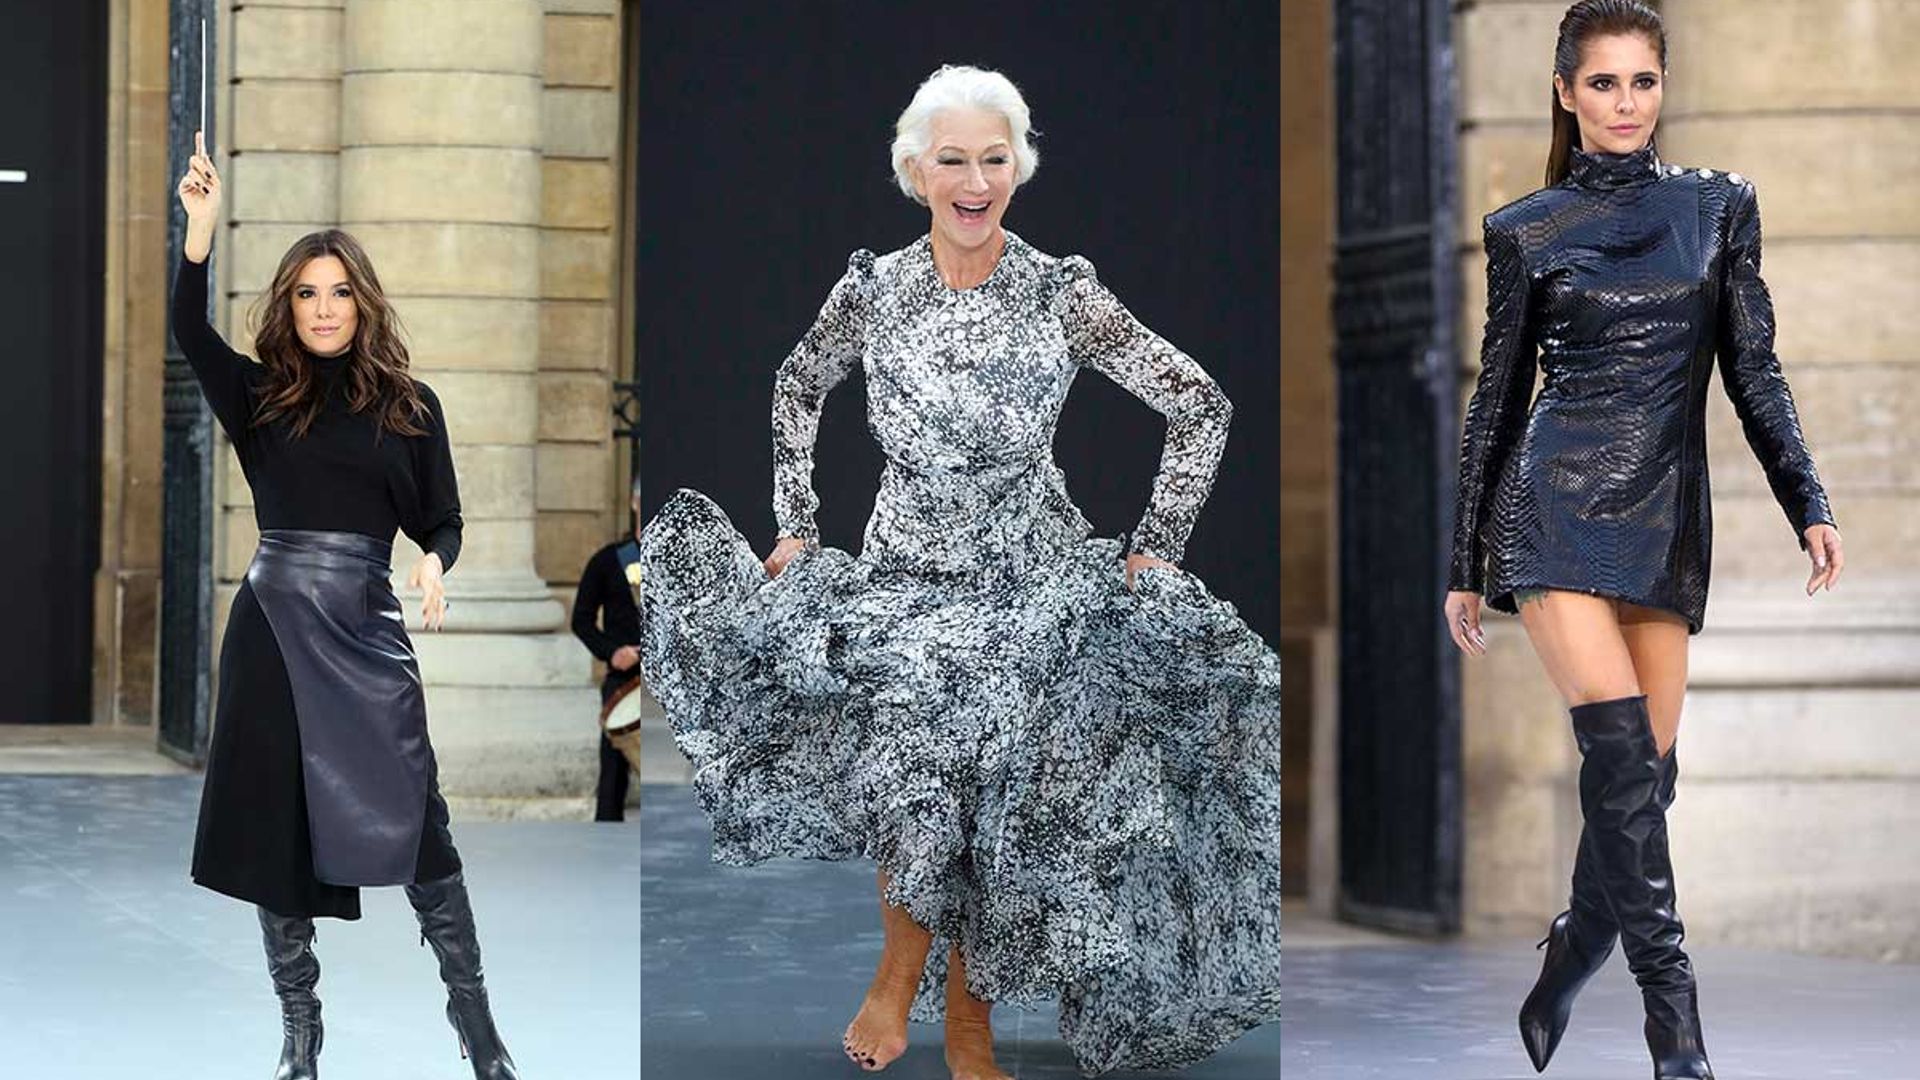 Dame Helen Mirren, 74, walks the catwalk at Paris Fashion Week alongside Cheryl and Eva Longoria